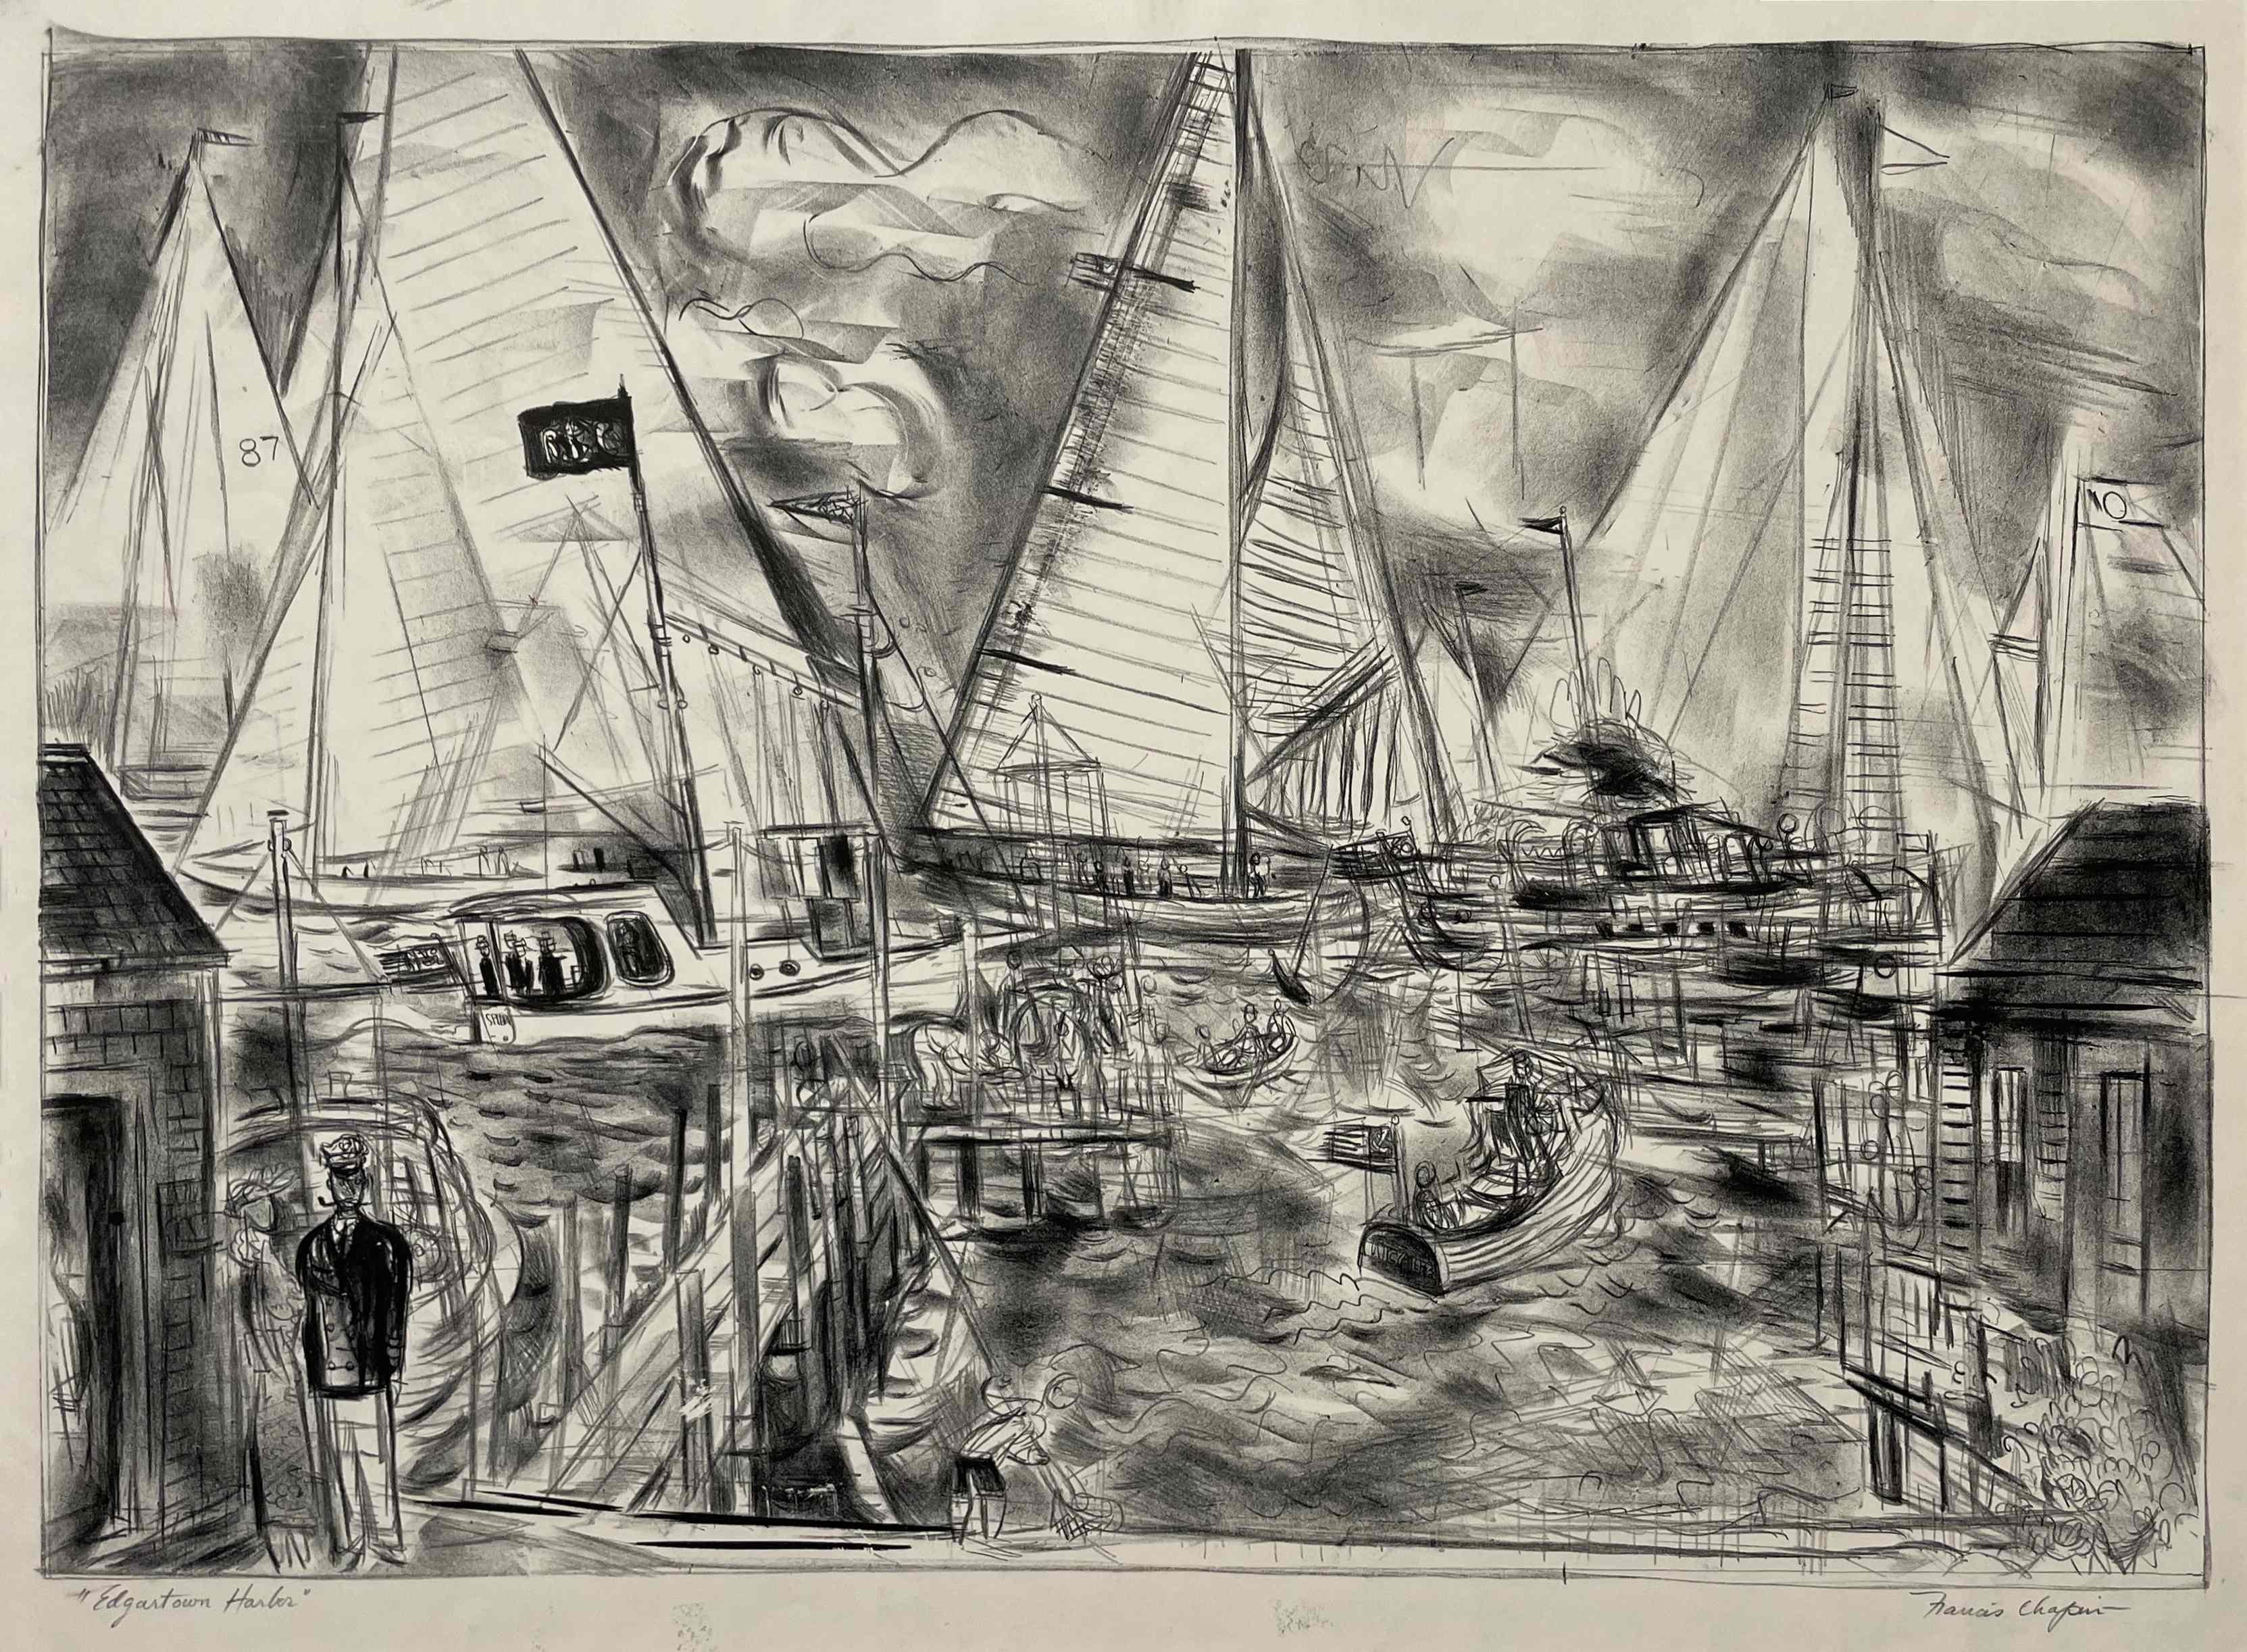 Francis Chapin Print - Edgartown Harbor